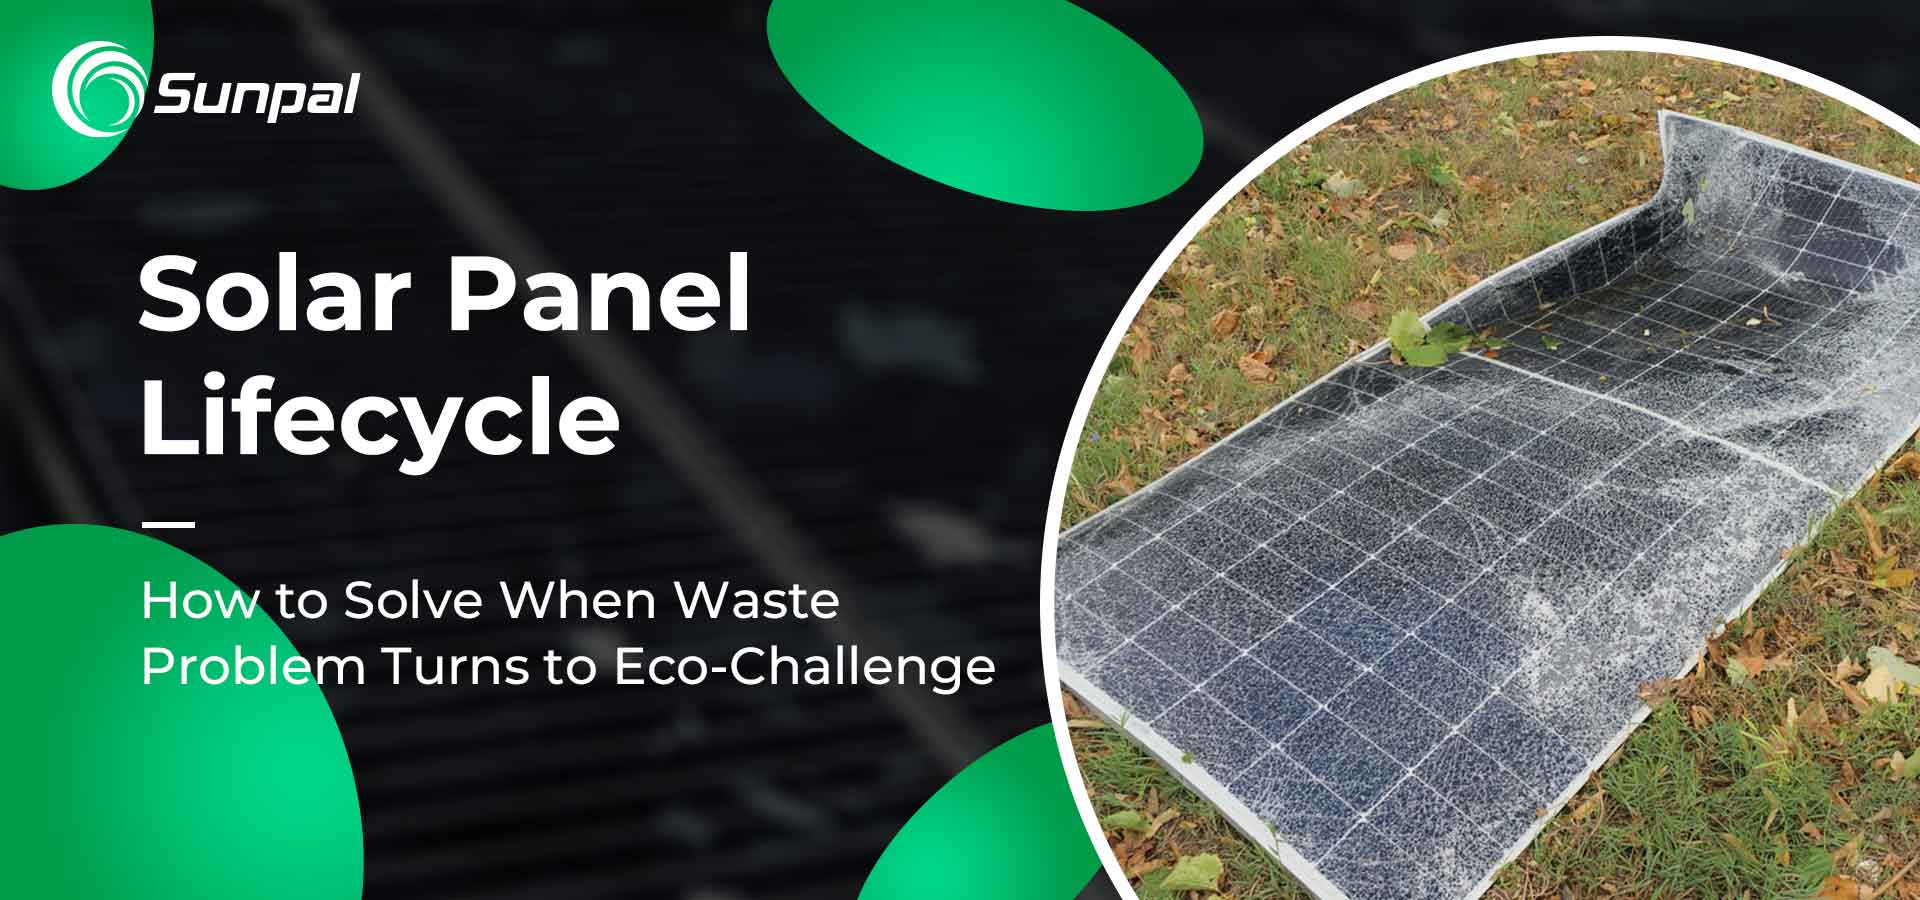 Solar Panel Lifecycle: Waste Problem Turns Eco-Challenge